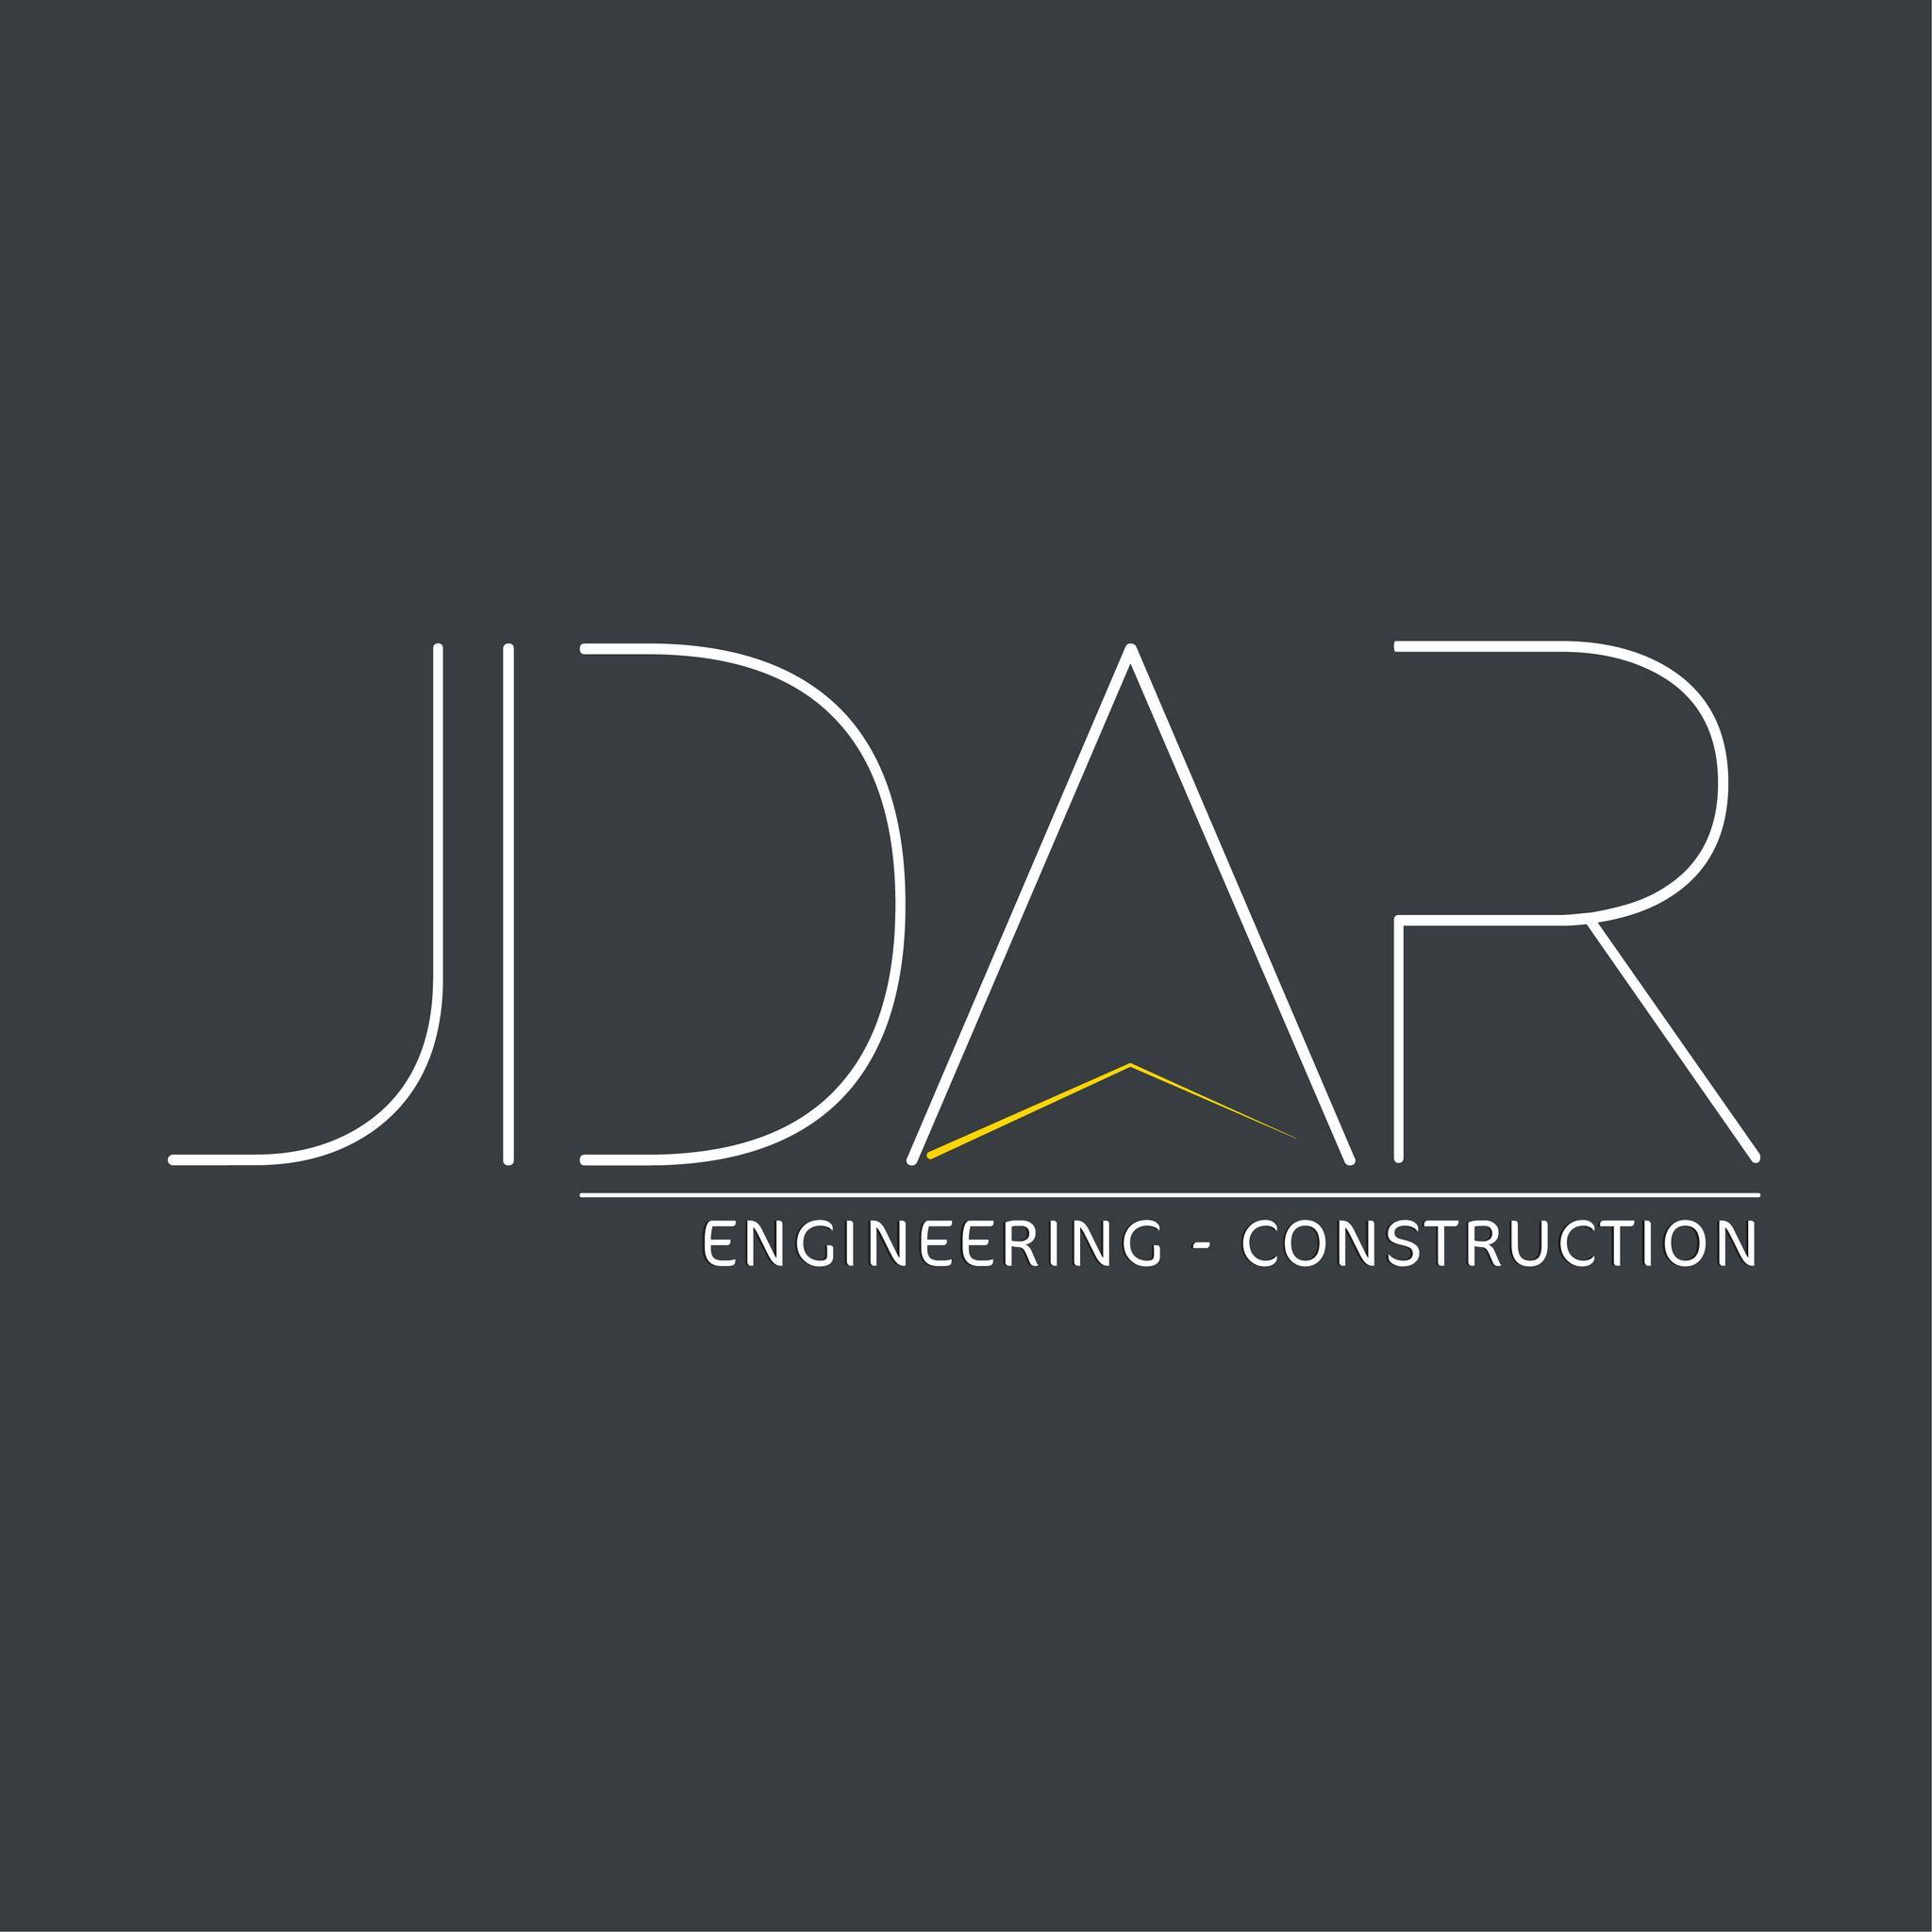 JIDAR Architect